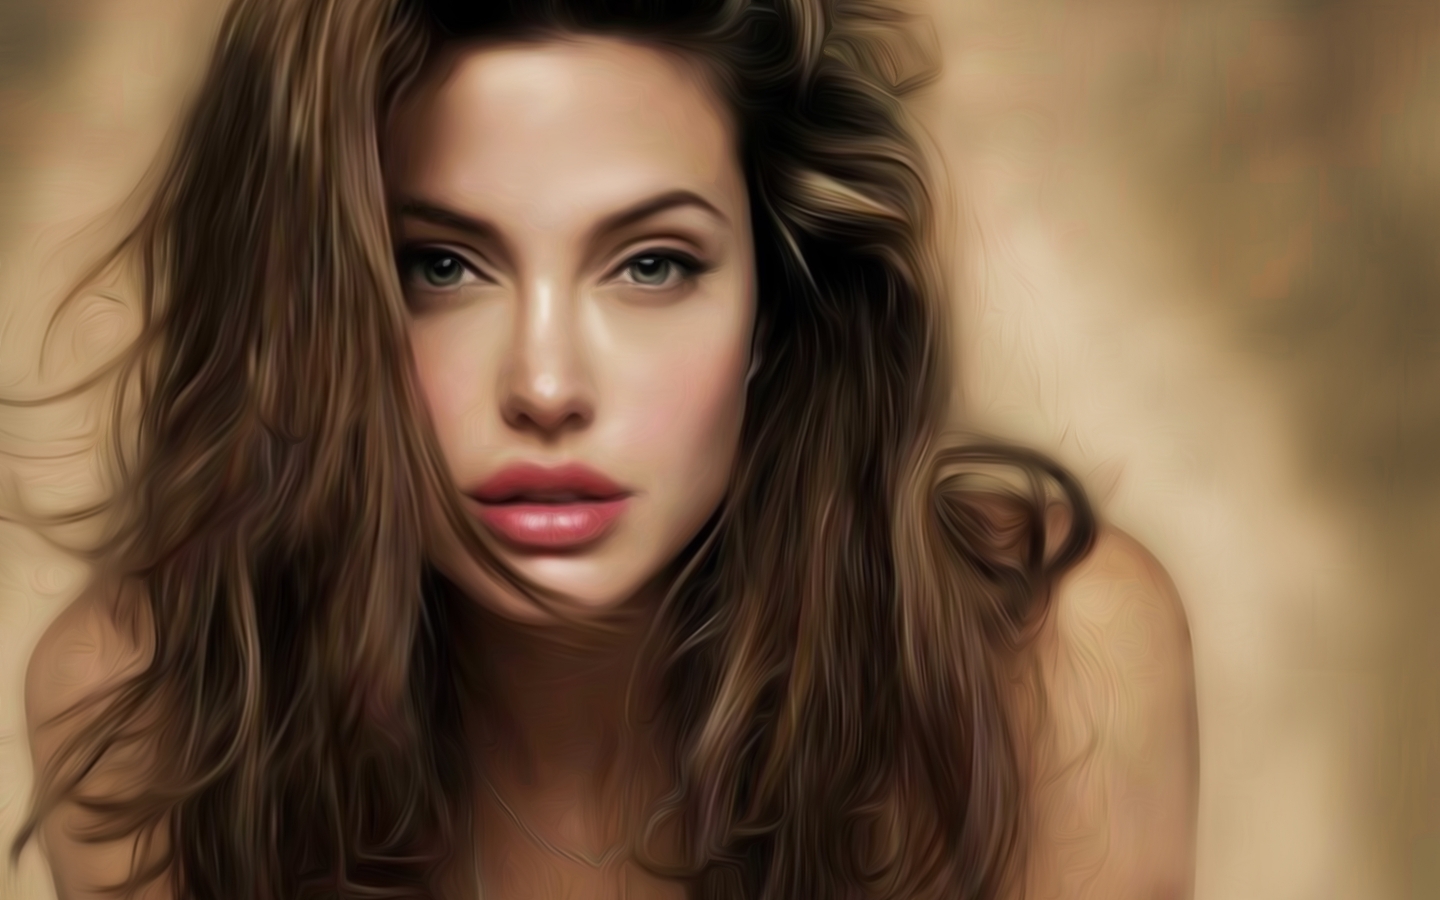 Angelina Jolie Look Art for 1440 x 900 widescreen resolution